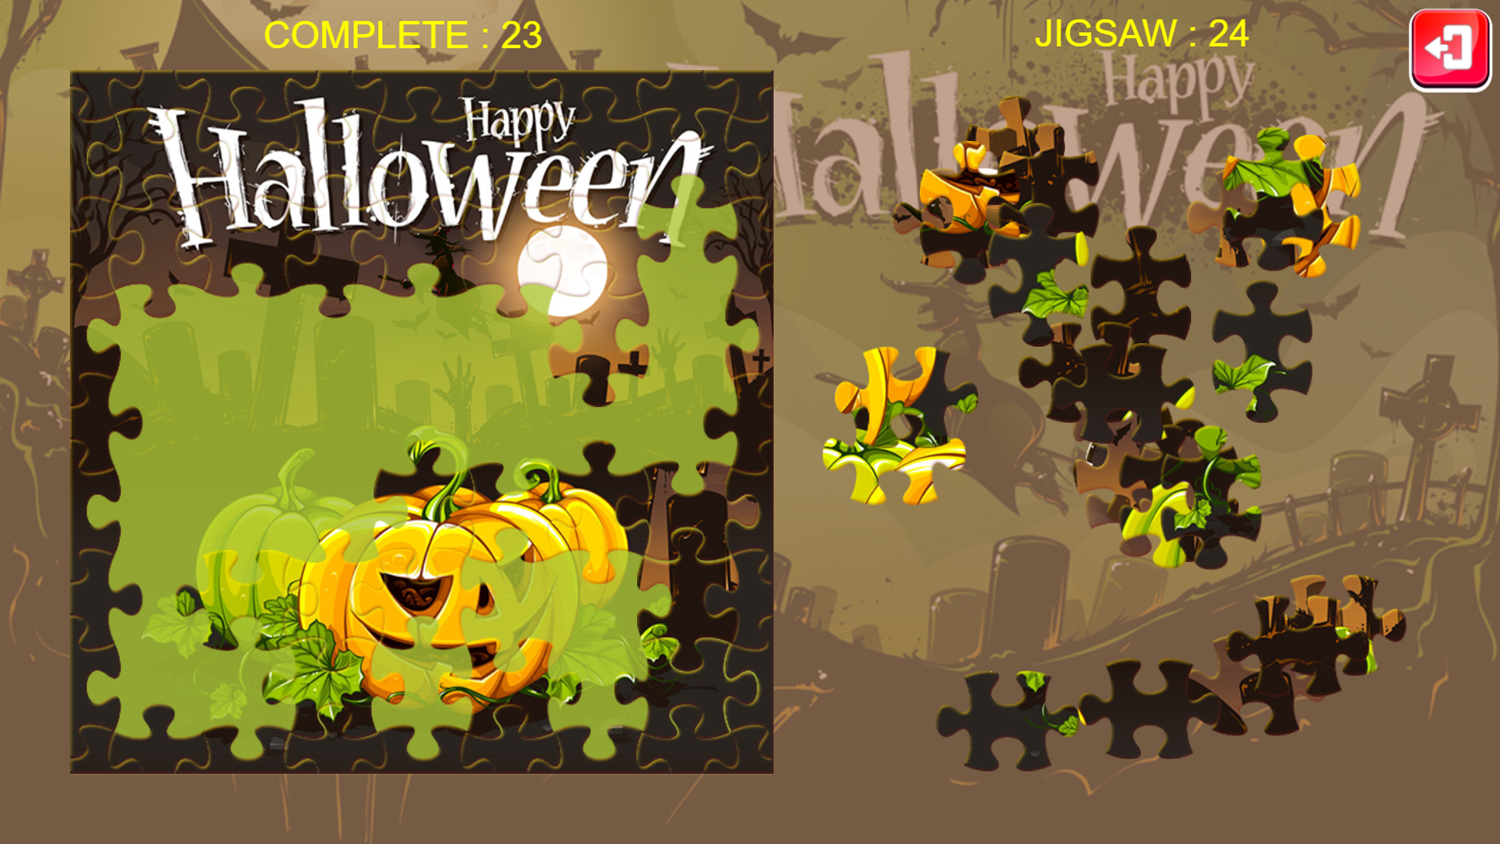 Happy Halloween Jigsaw Puzzle Game Solve Screenshot.